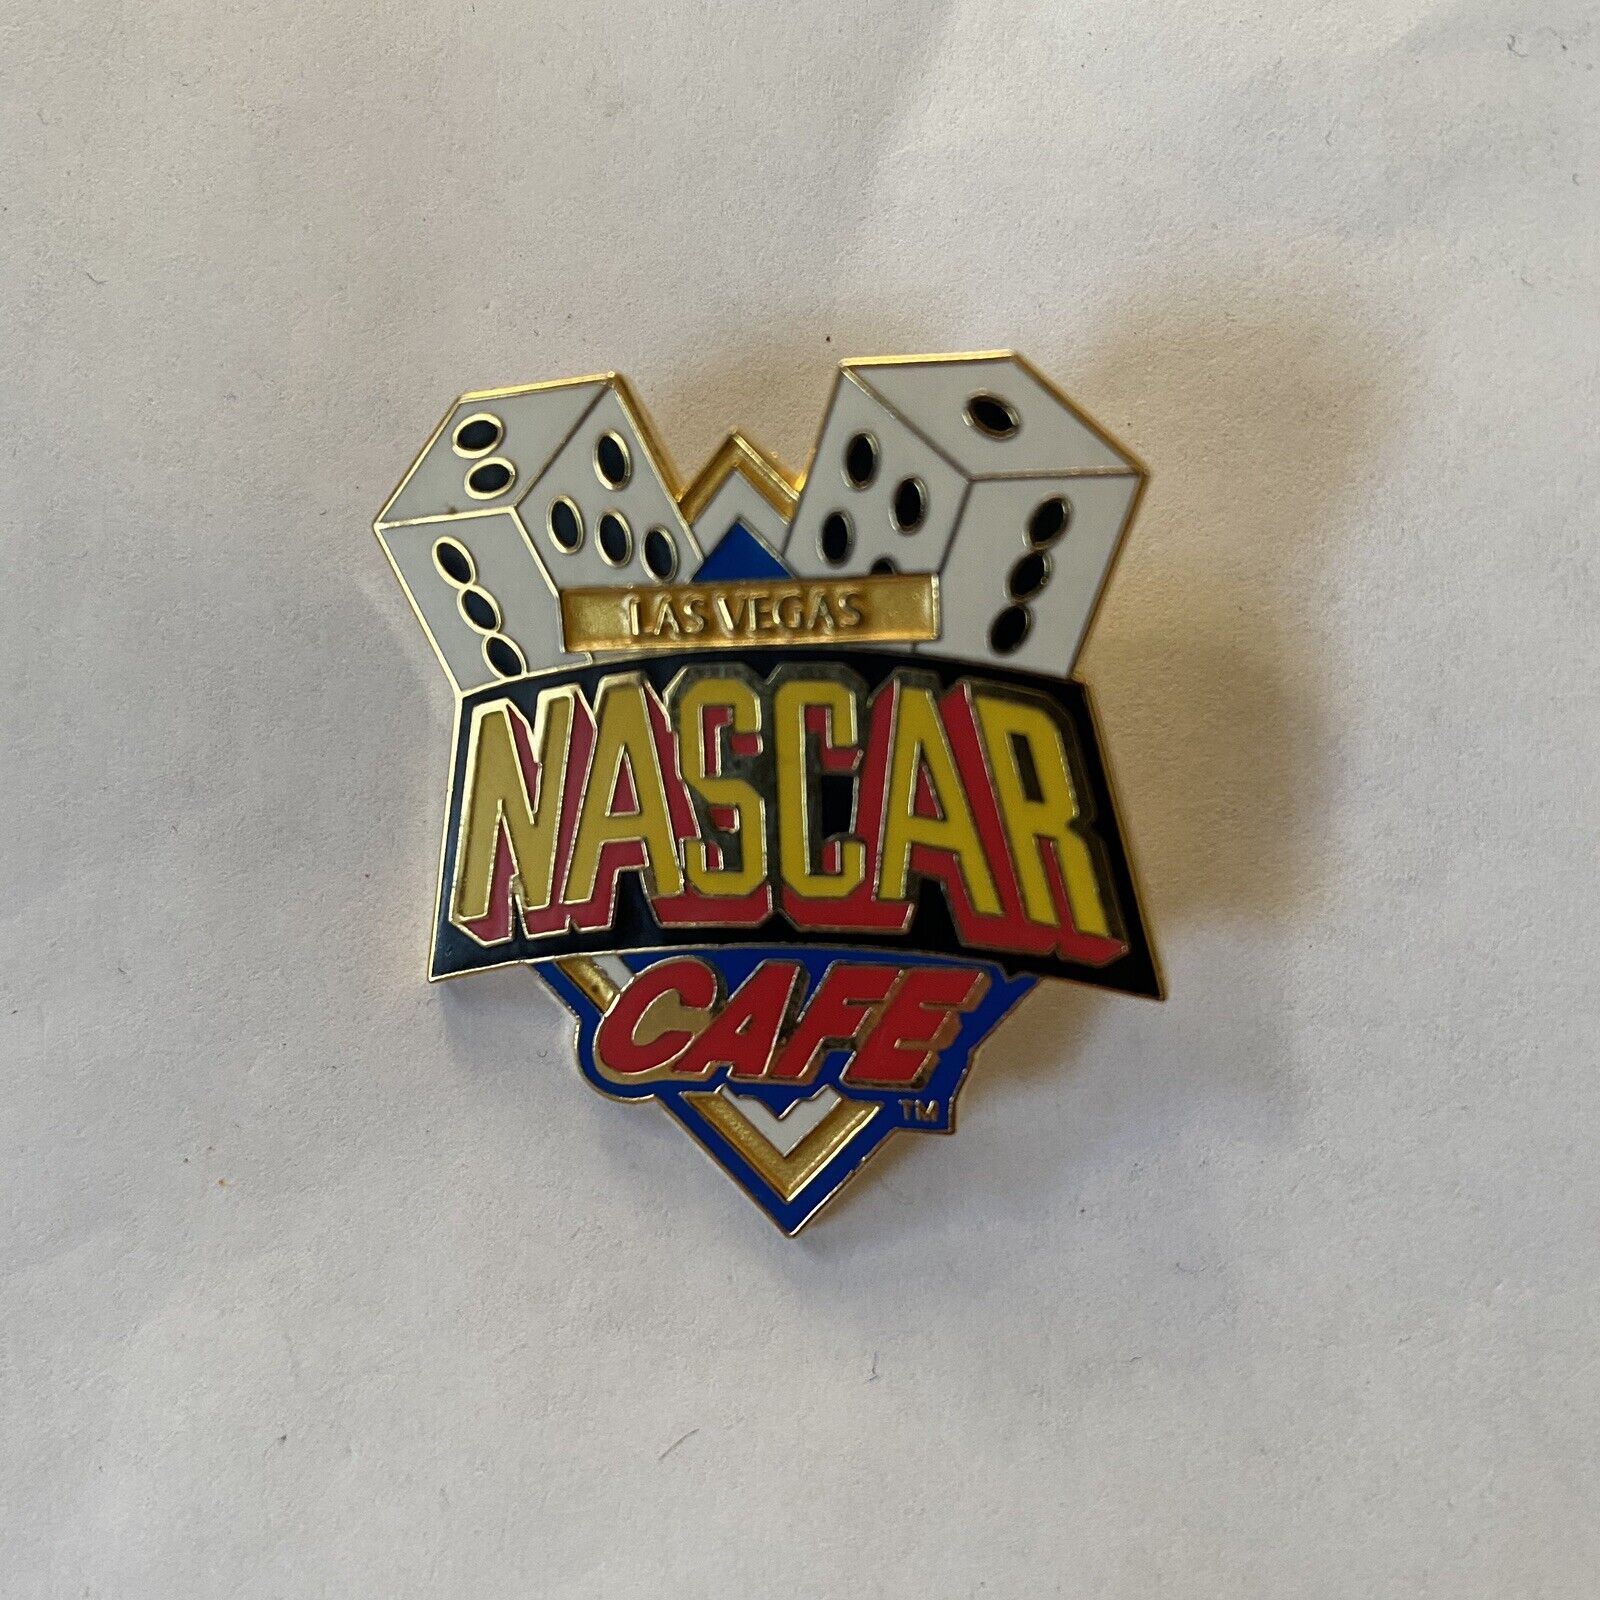 Las Vegas NASCAR Cafe Pin Button Pinback Stock Car Racing Nevada Auto